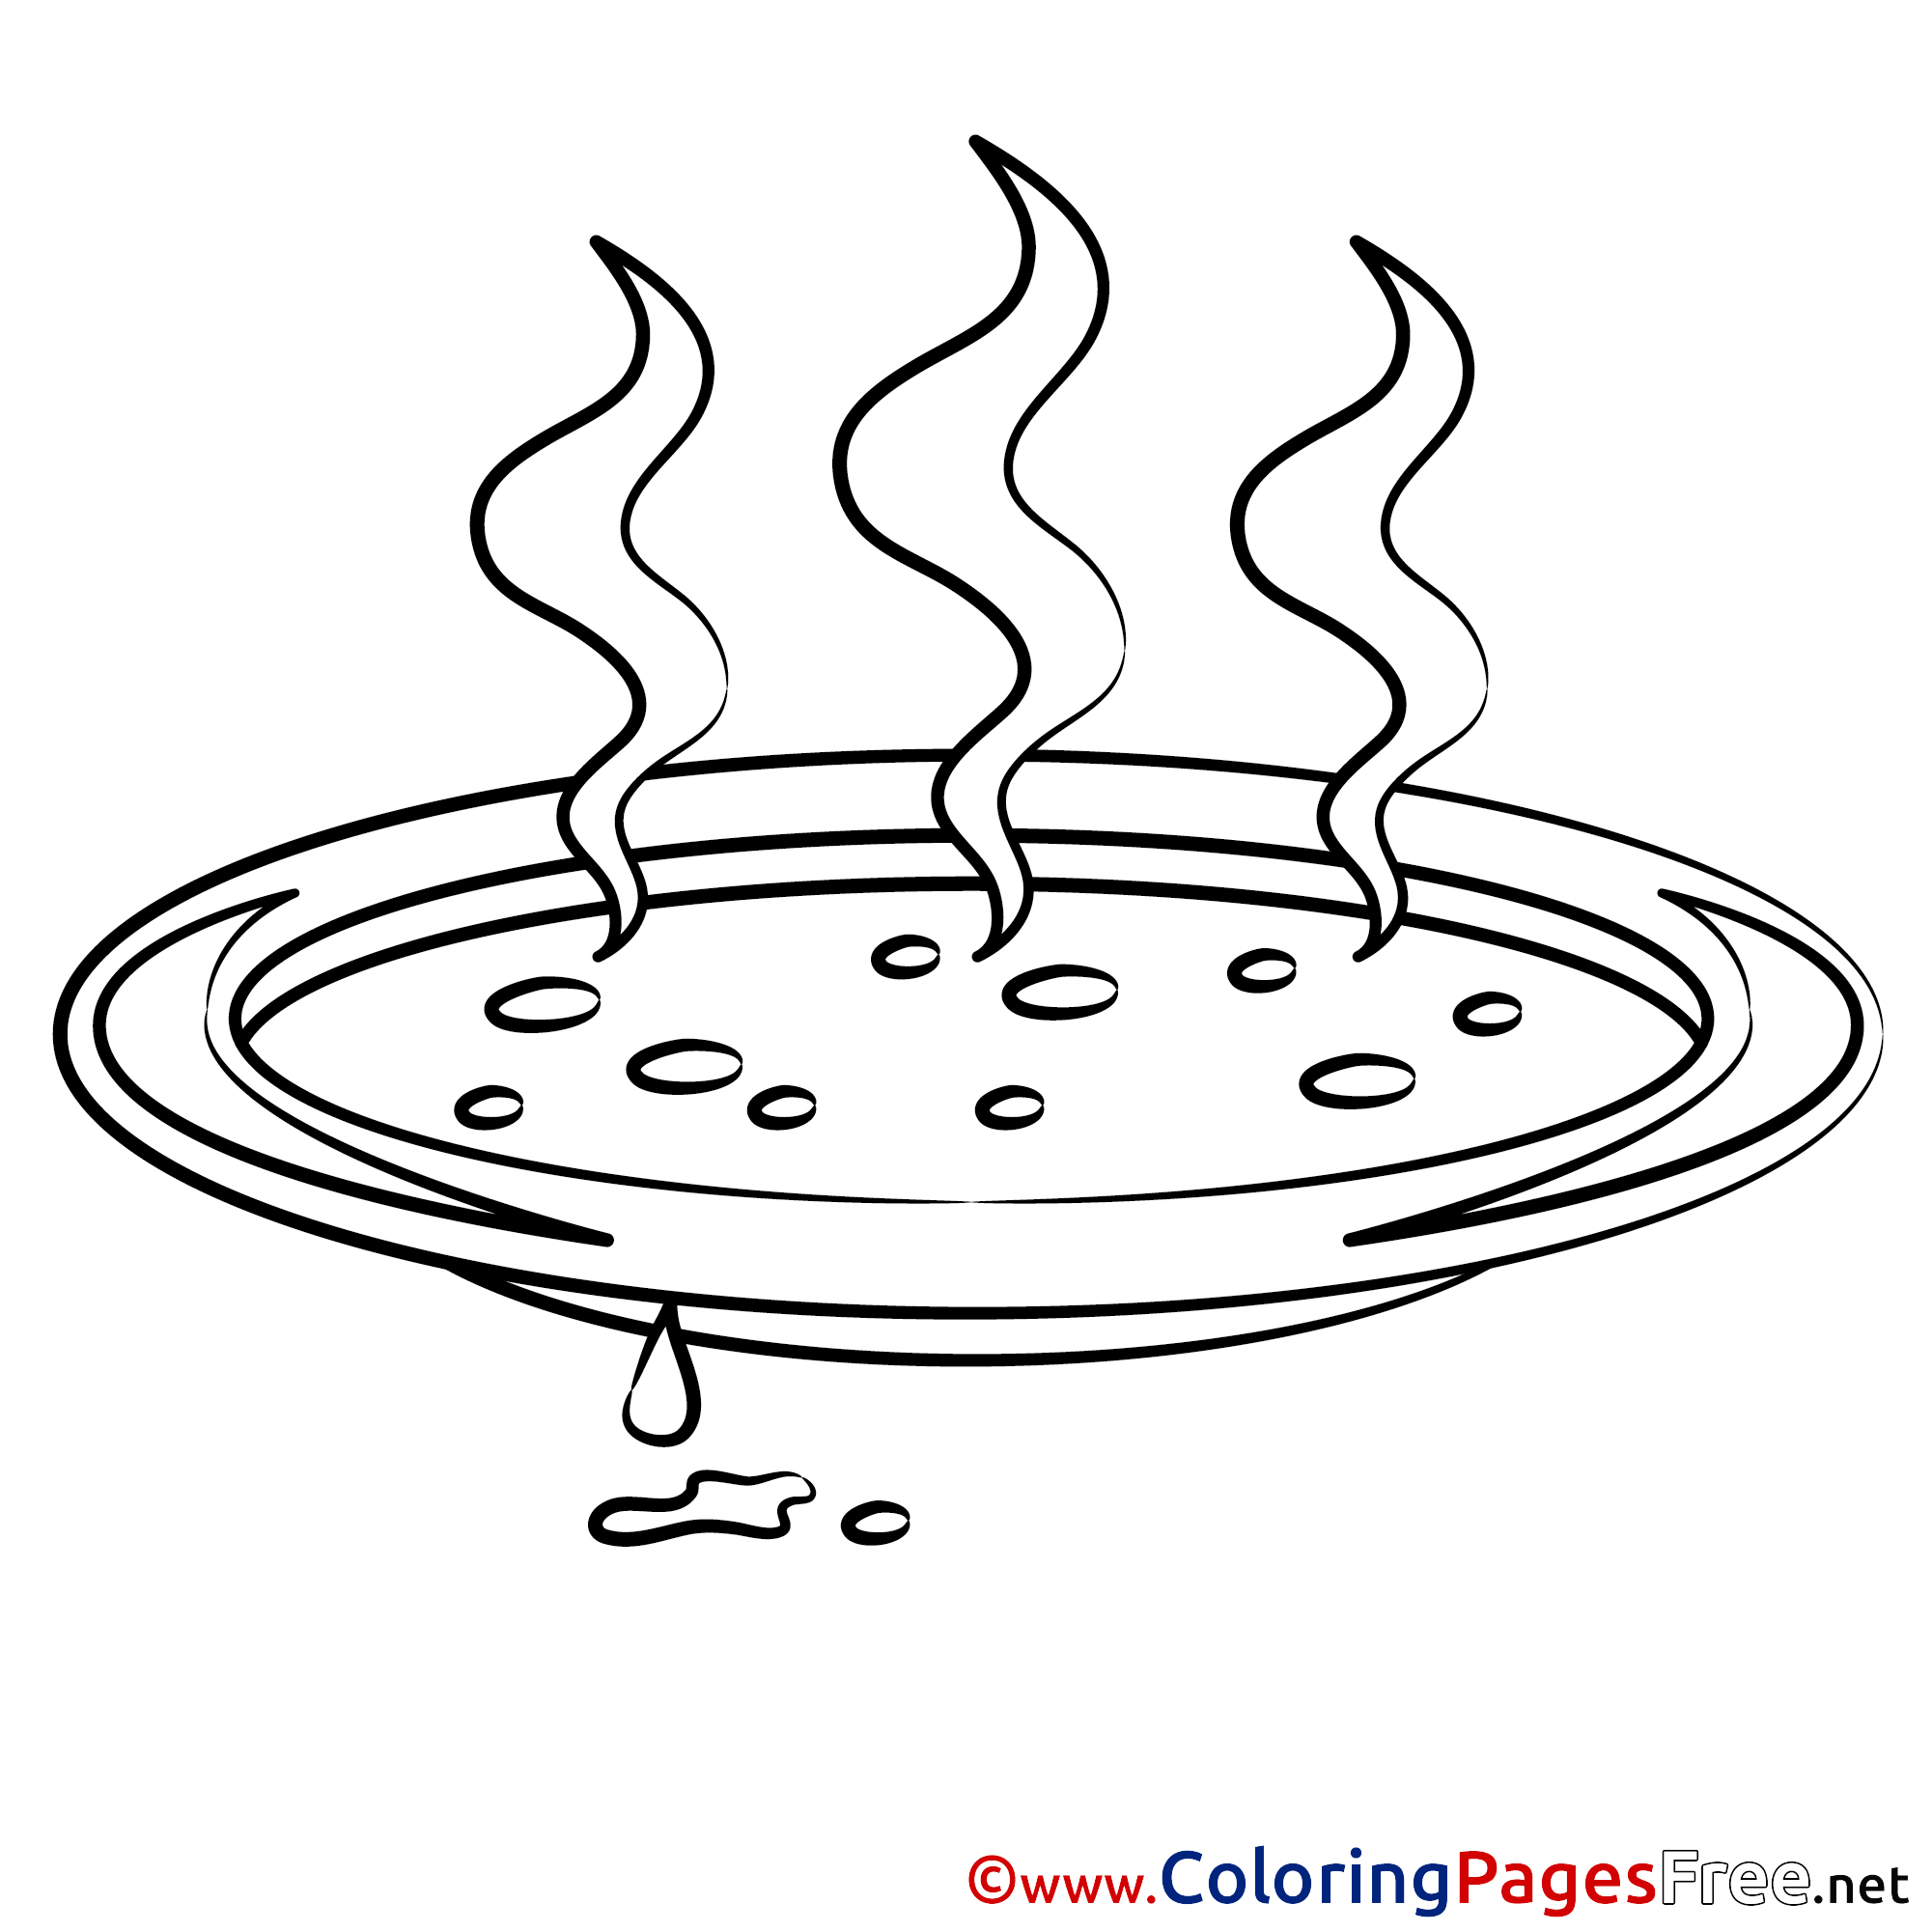 Soup free printable coloring sheets